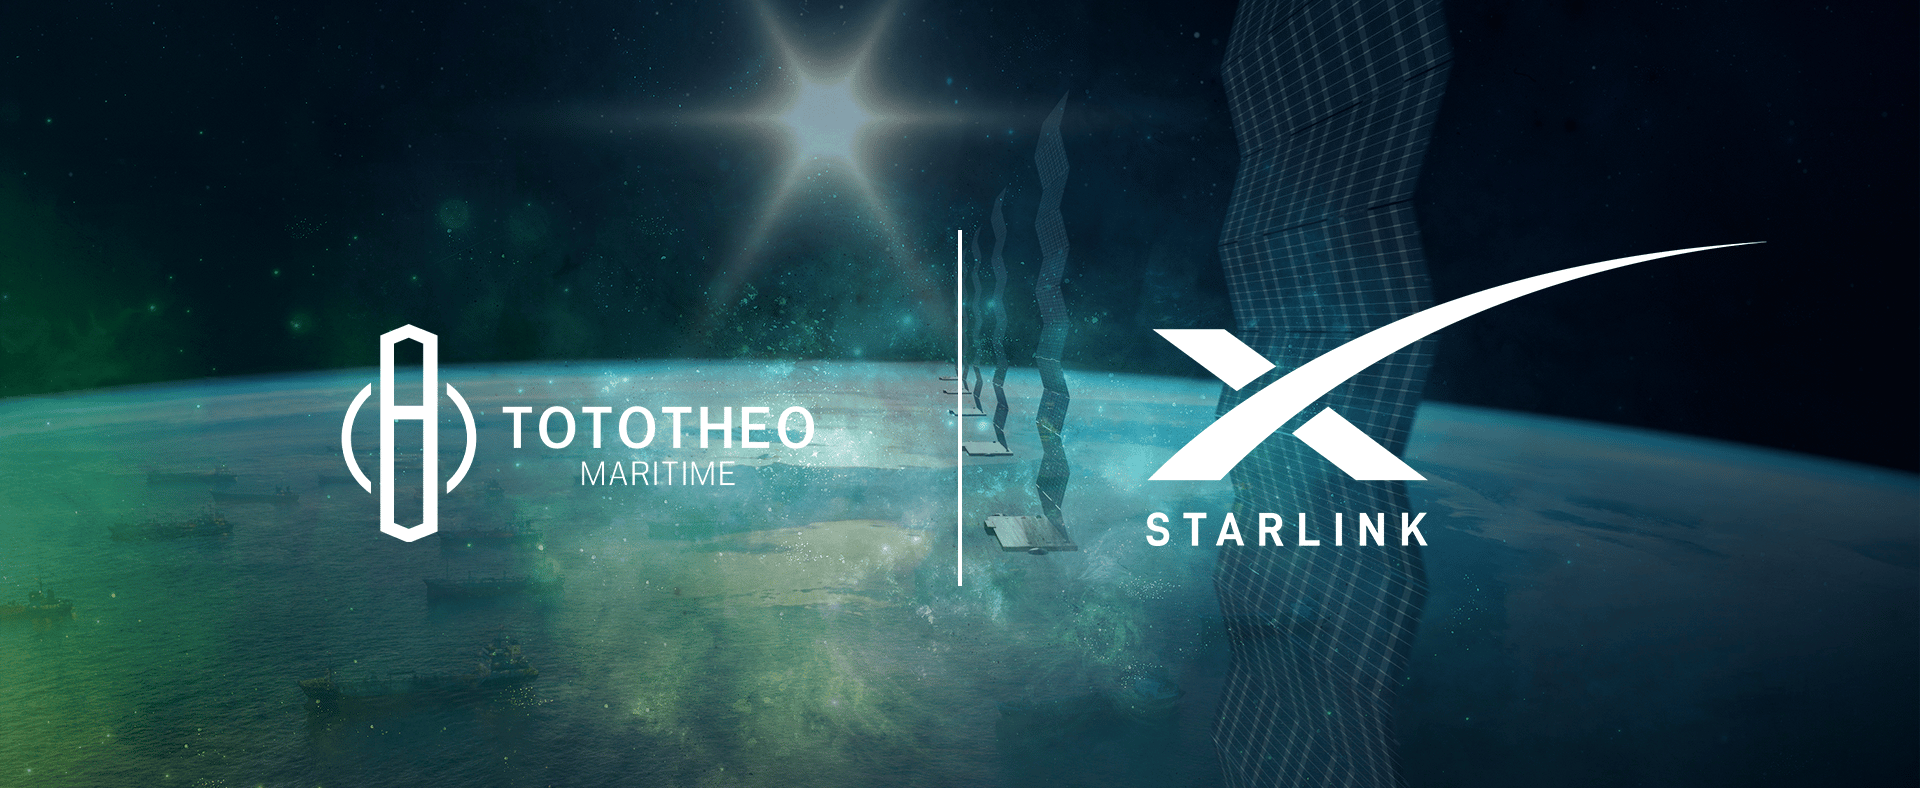 image Tototheo Maritime incorporates Starlink into its service portfolio